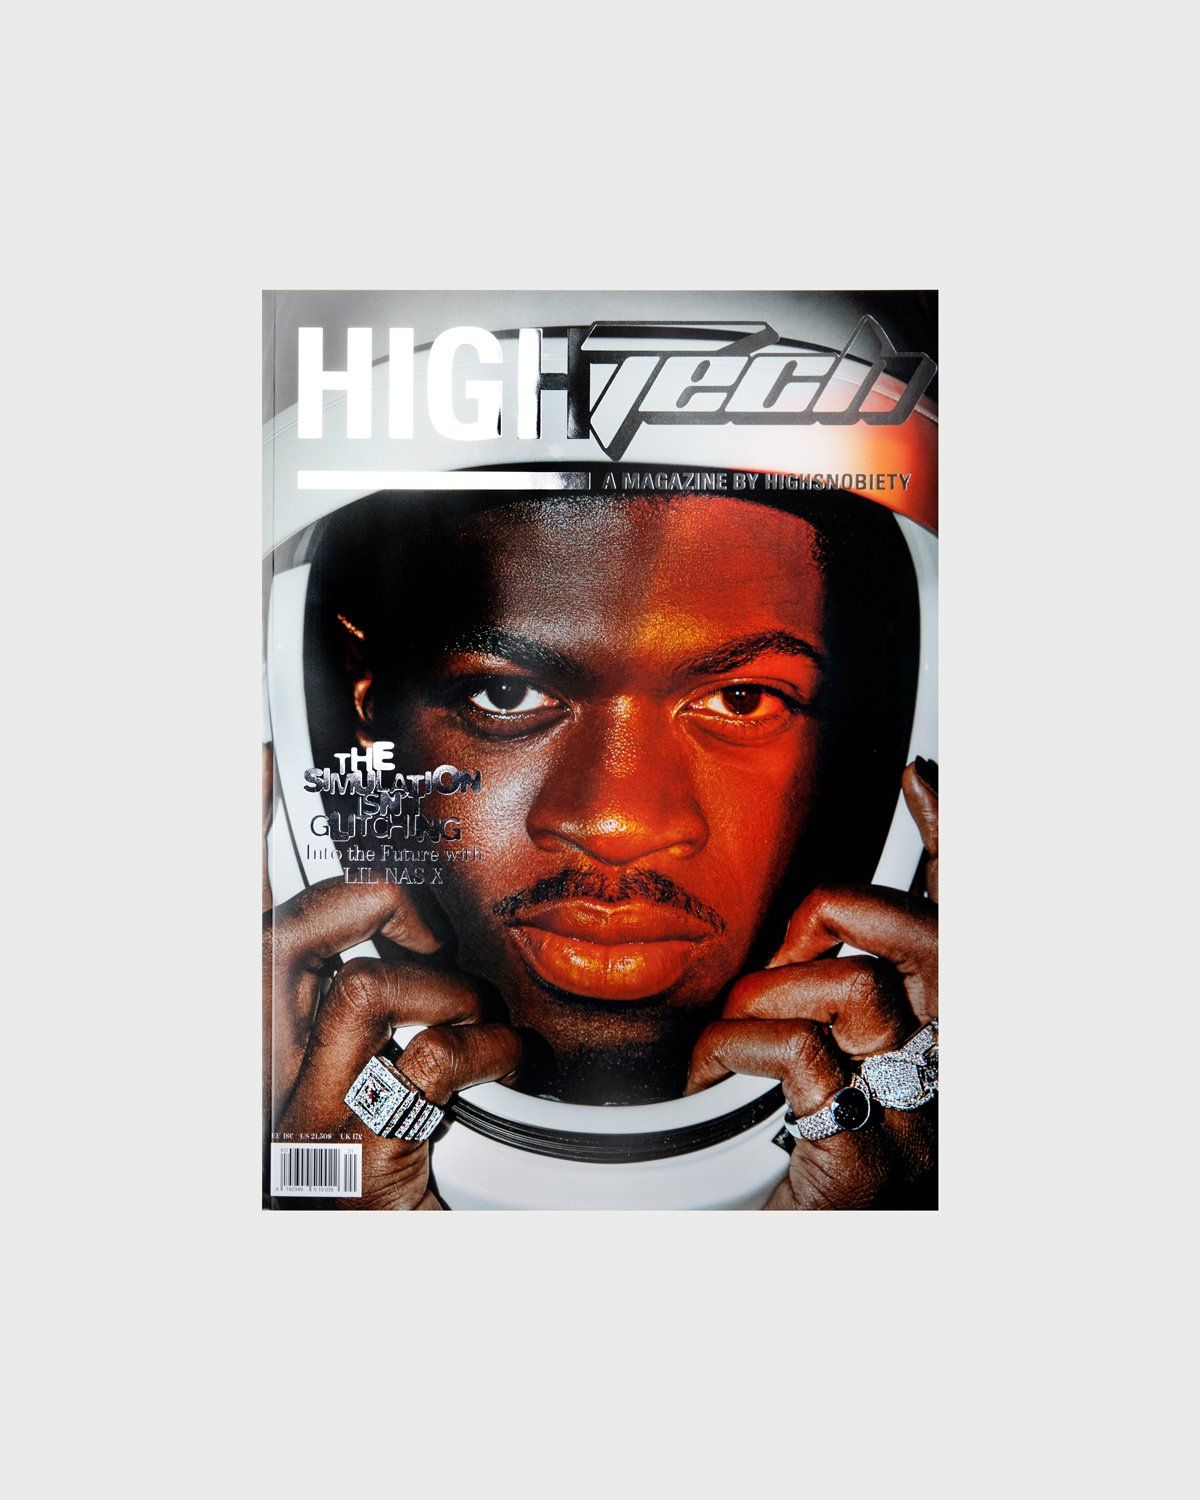 Highsnobiety – HIGHTech - A Magazine by Highsnobiety - Image 1